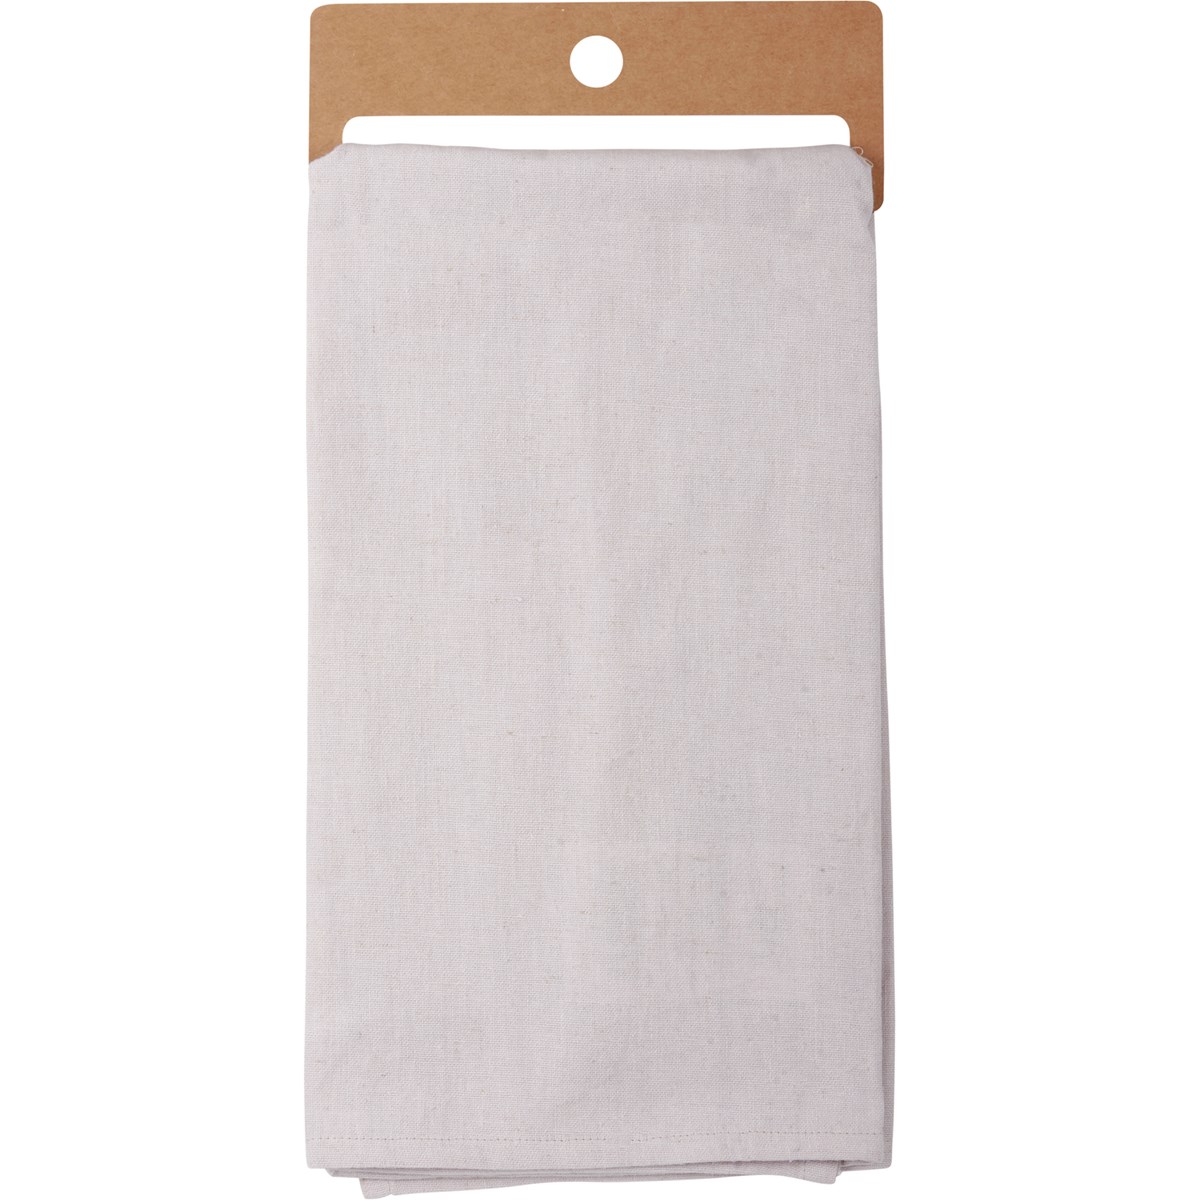 Merry Christmas Greens Kitchen Towel - Cotton, Linen